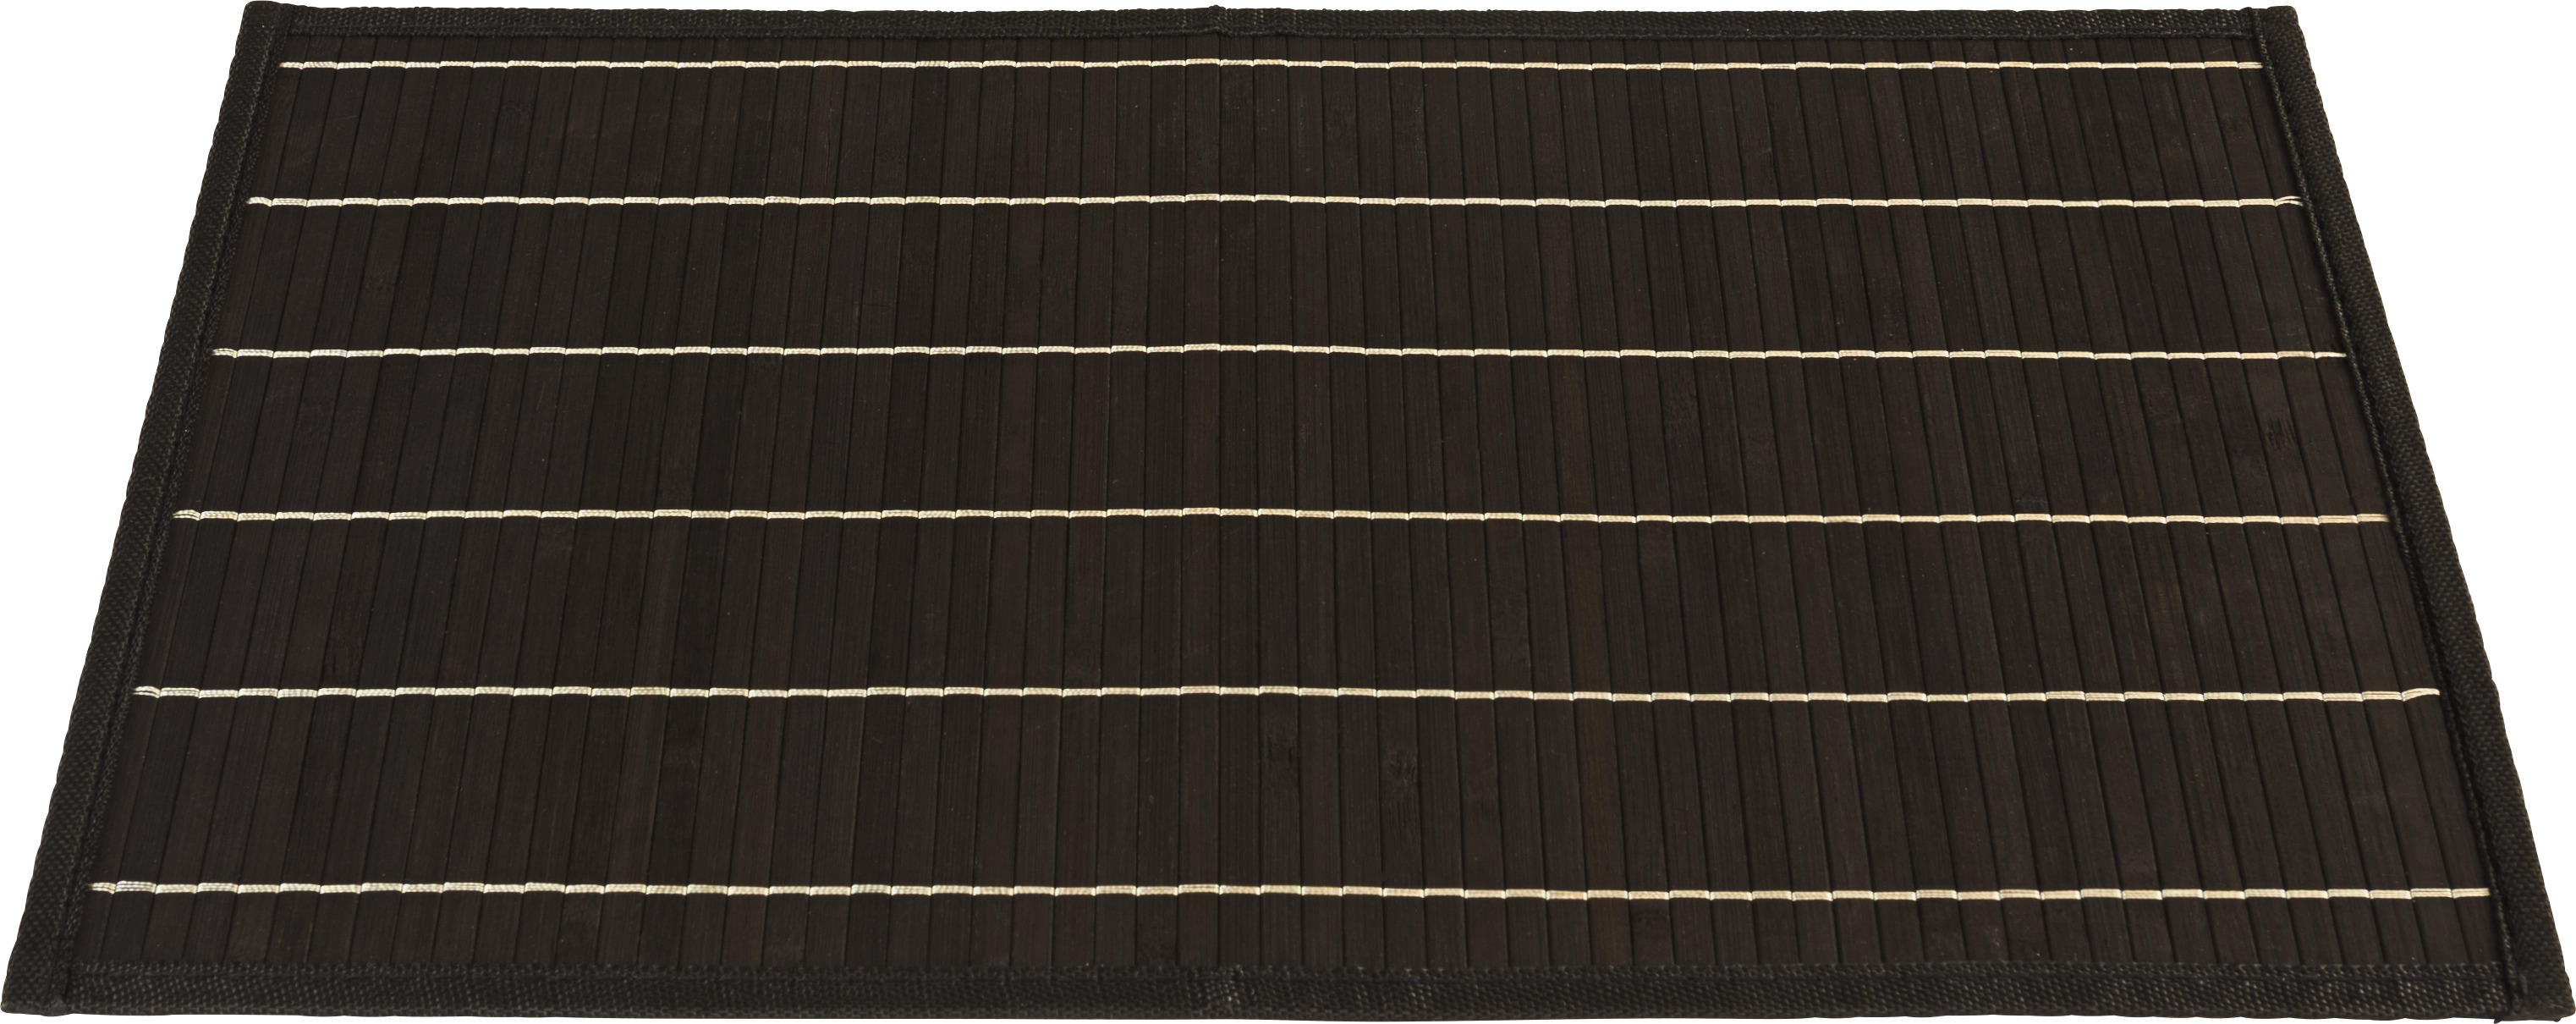 Platzset schwarz Bambus B/L: ca. 45x30 cm Platzset_Bamboo 30x45cm schwarz - schwarz (45,00/30,00cm)